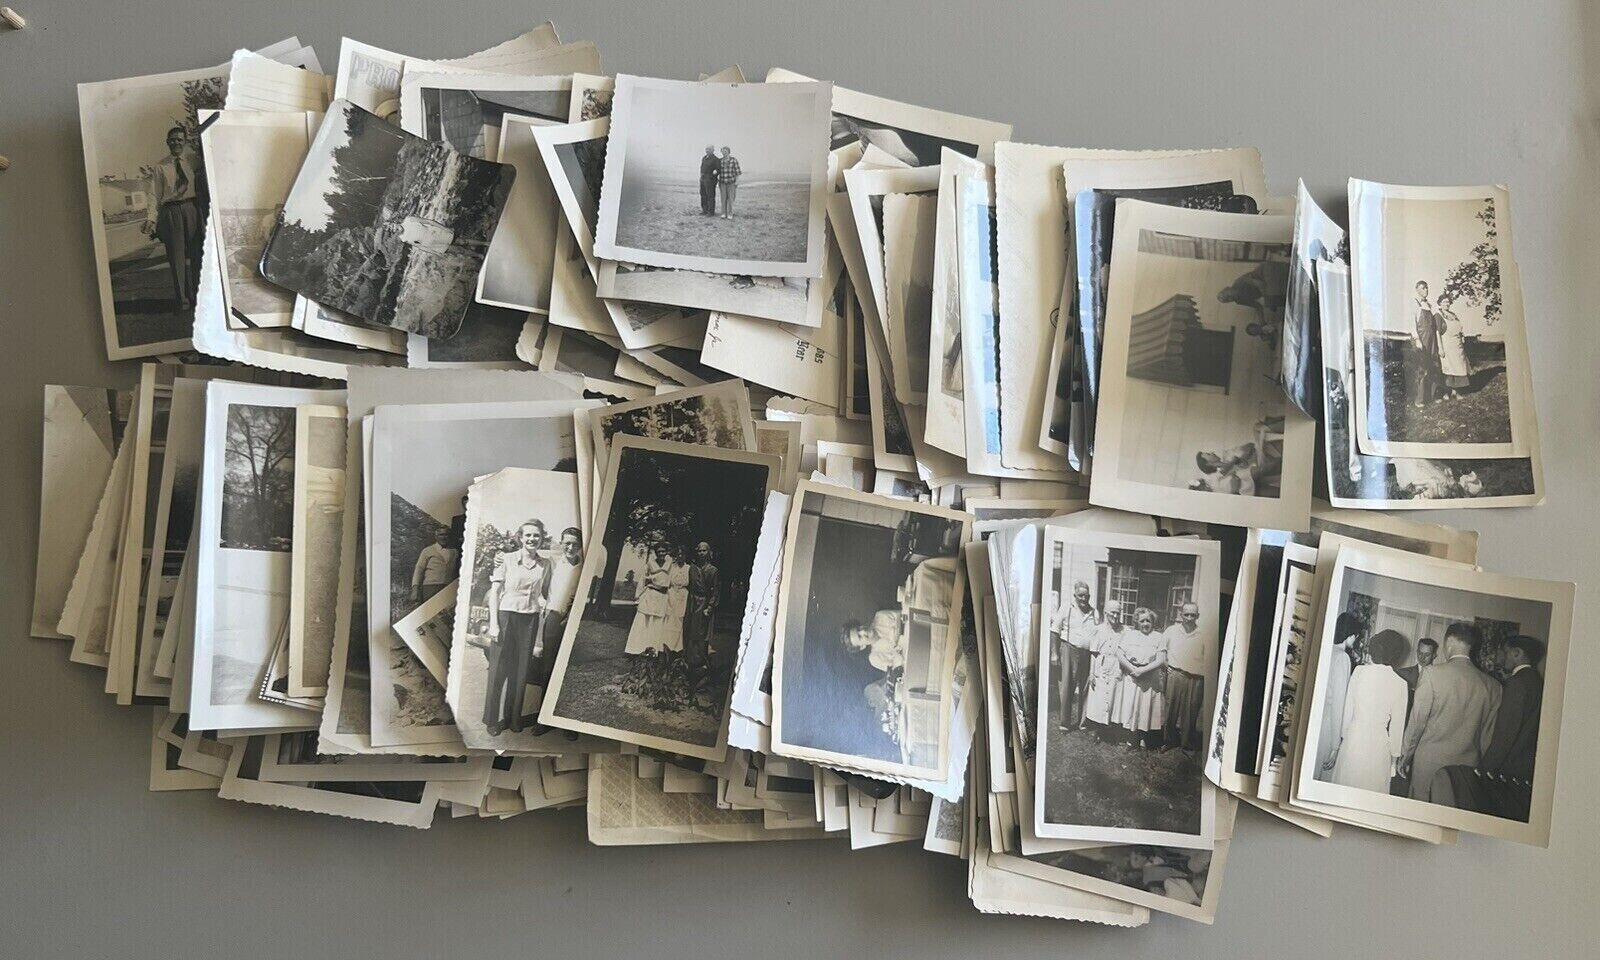 LOT OF 75 ORIGINAL RANDOM FOUND OLD PHOTOGRAPHS B&W SEPIA VINTAGE SNAPSHOTS